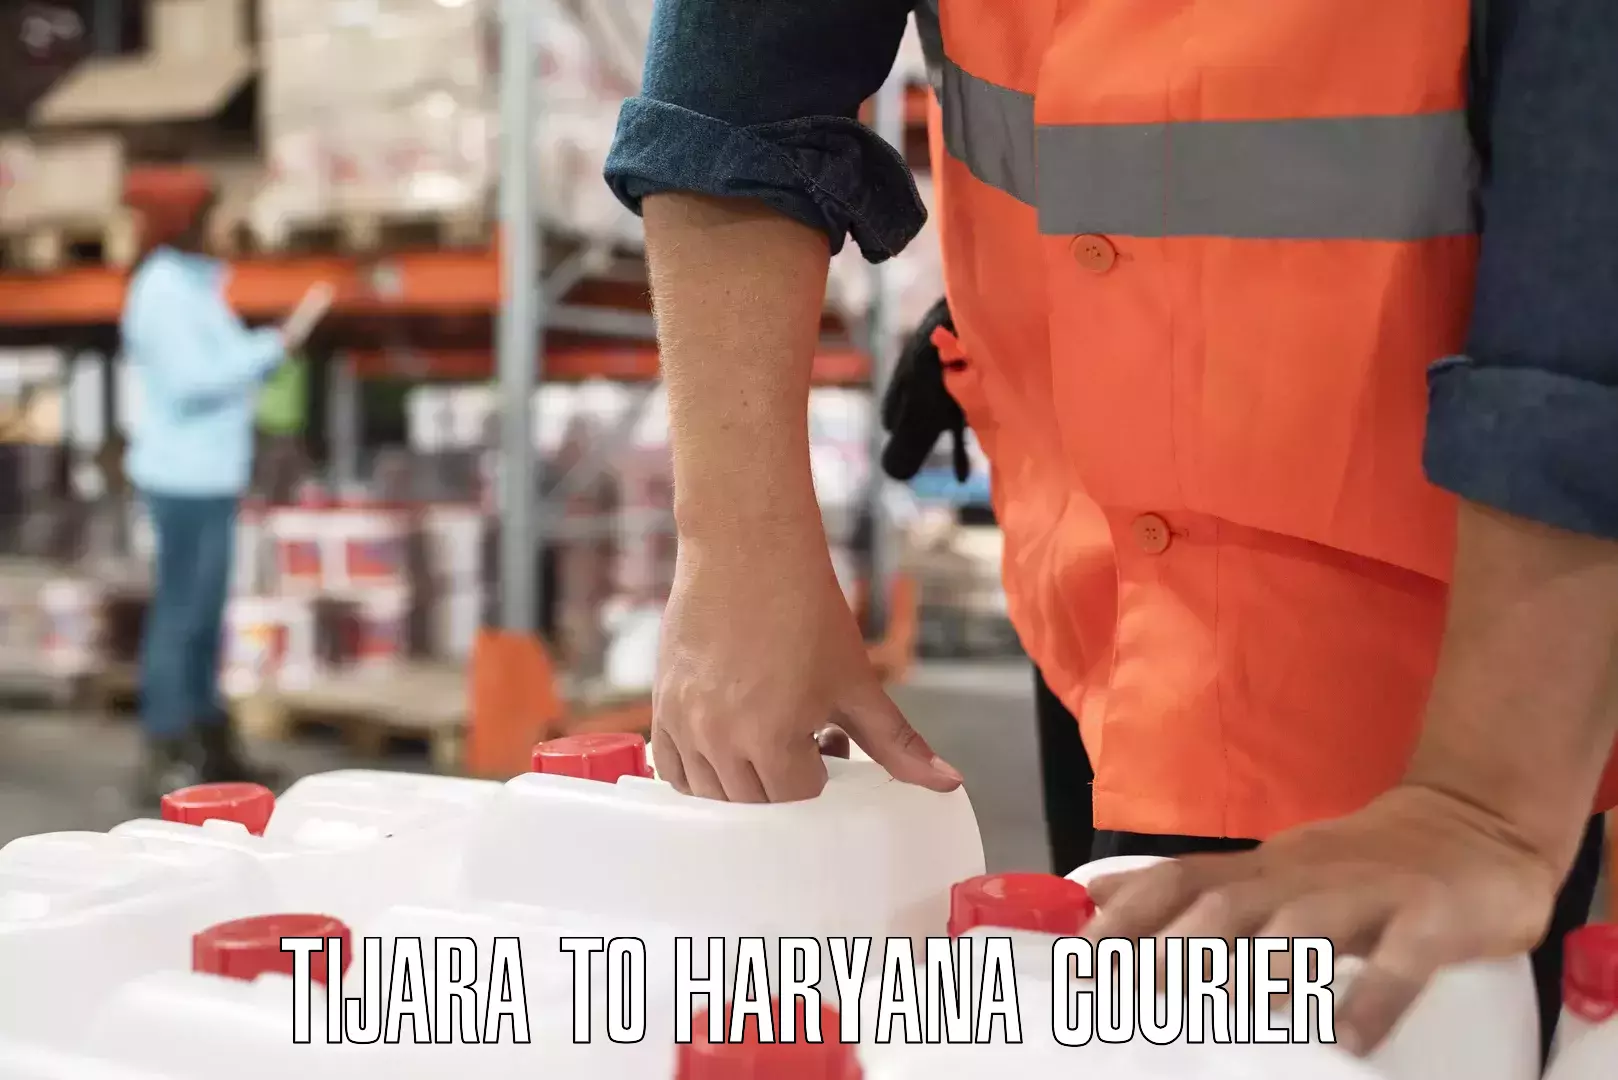 Courier service innovation Tijara to Chirya